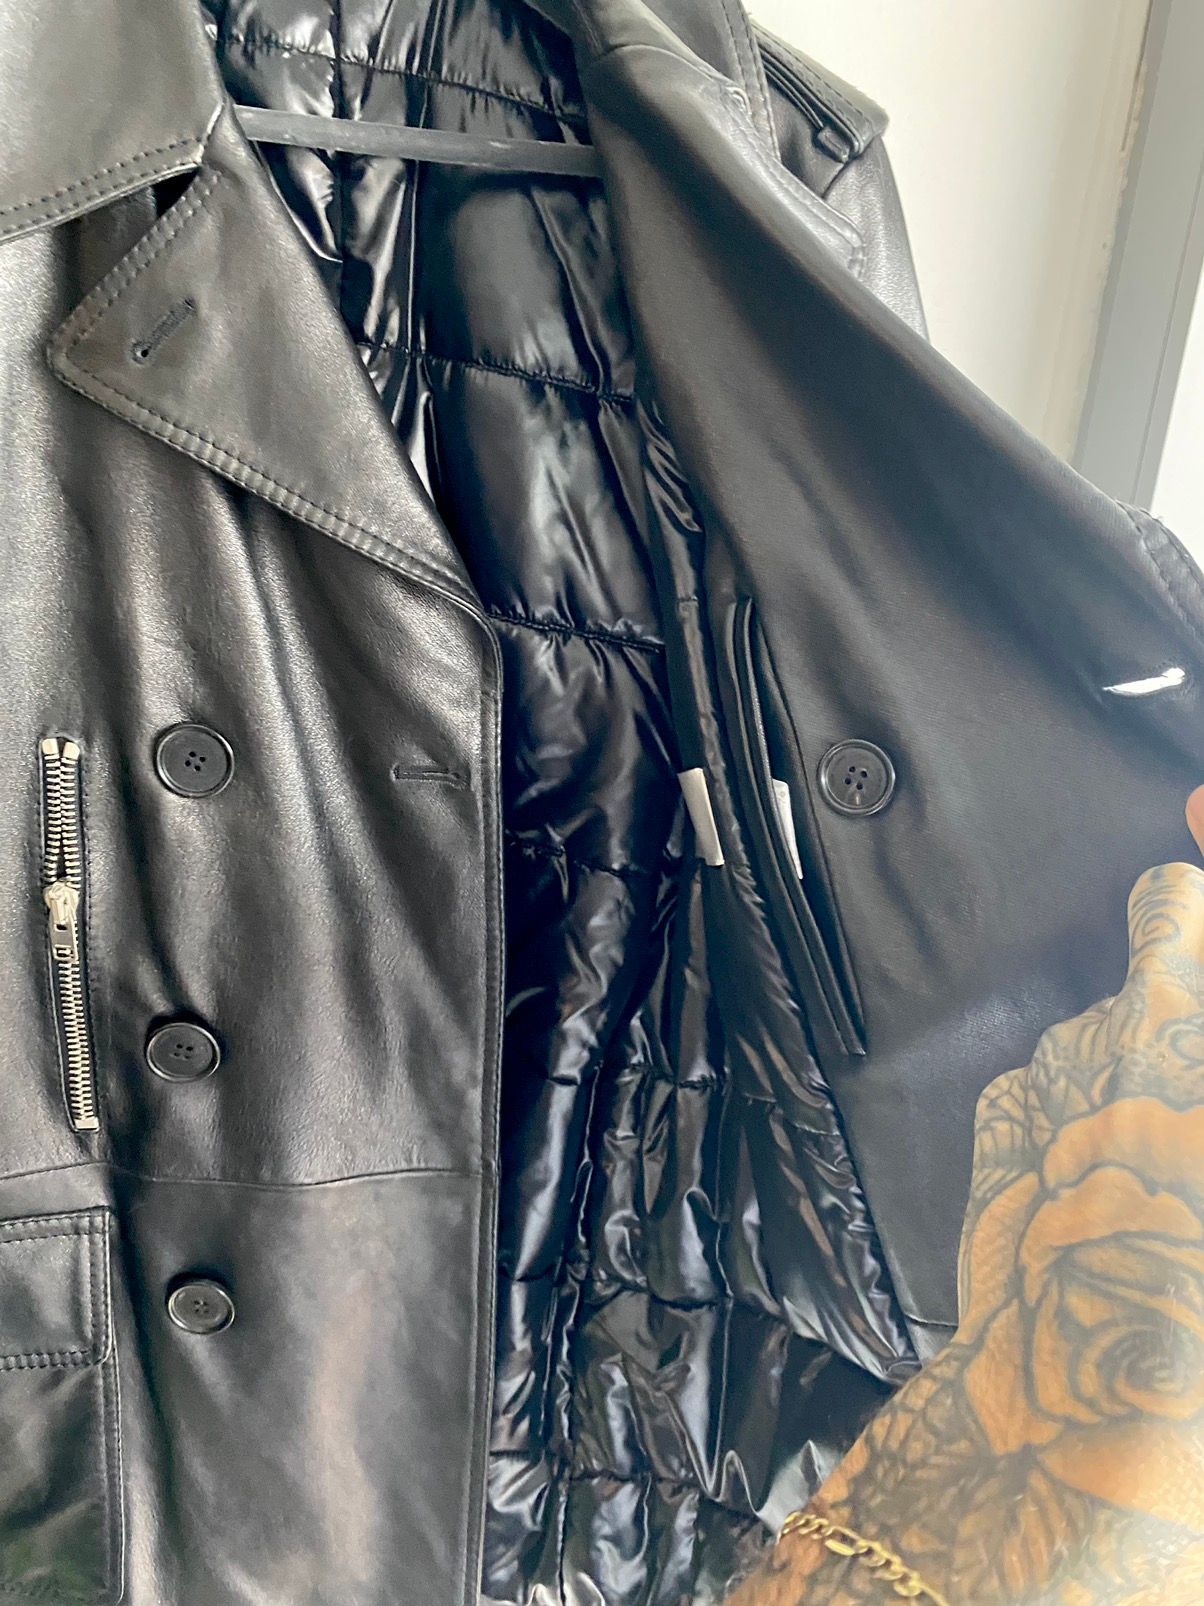 Dior Homme 07 RUNWAY #23 Leather Belt Pea Coat Jacket NEW